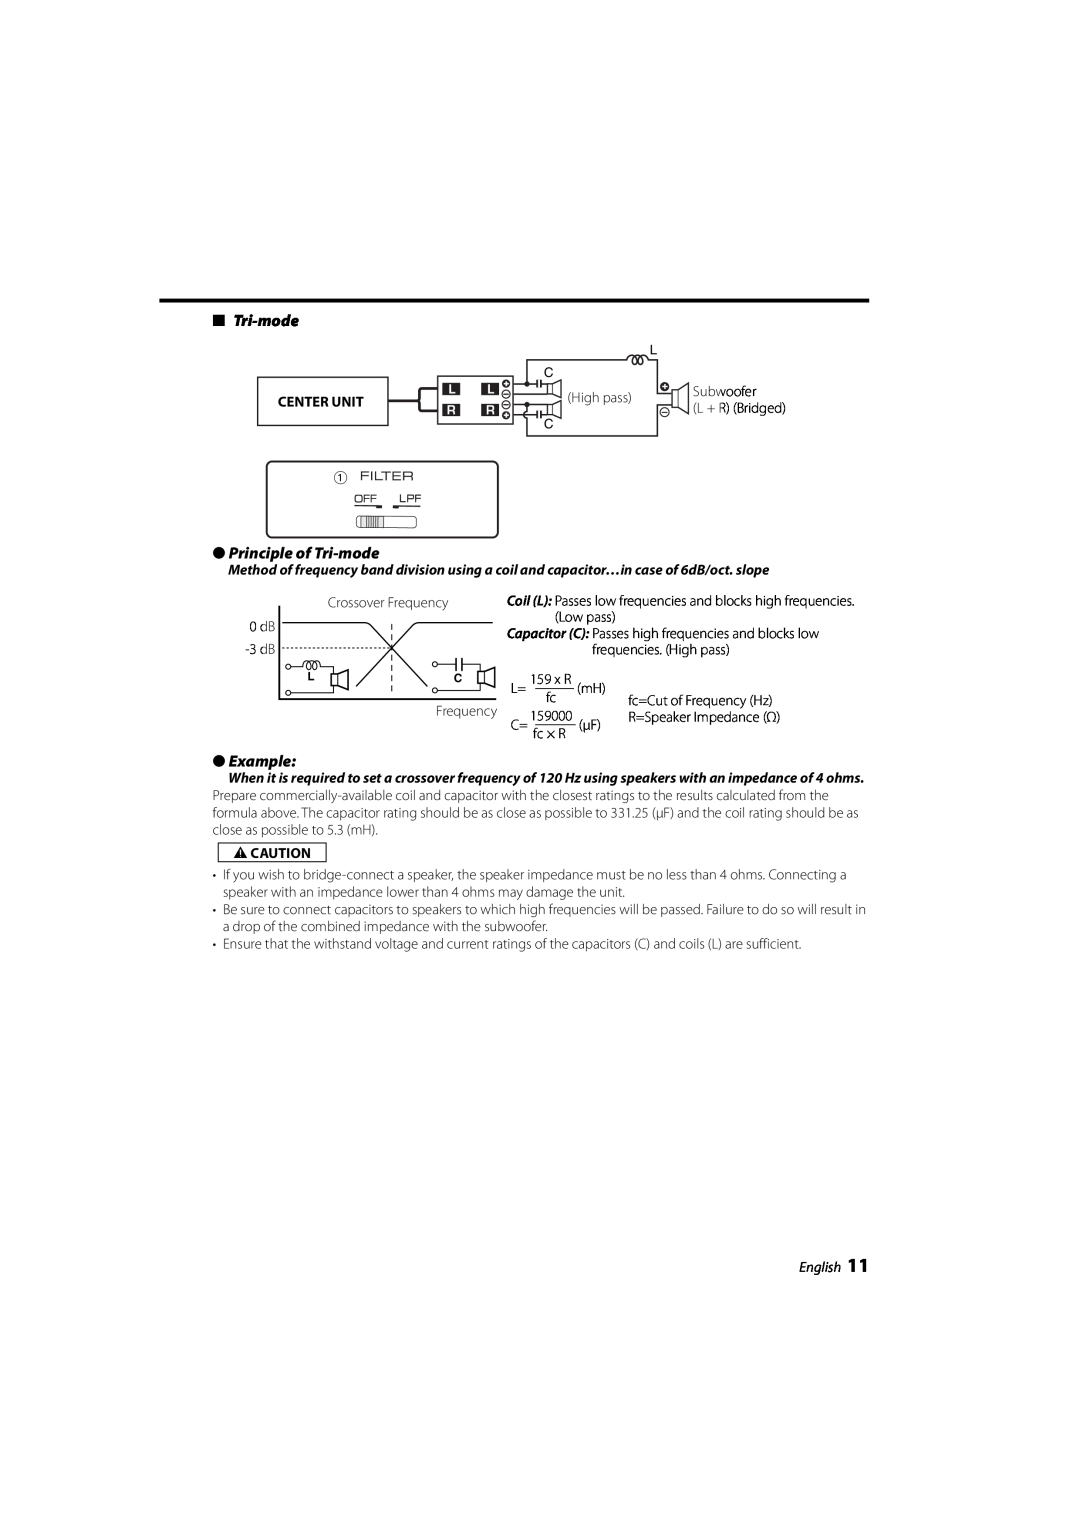 Kenwood KAC-6203 instruction manual Principle of Tri-mode, Center Unit, 2CAUTION, English 